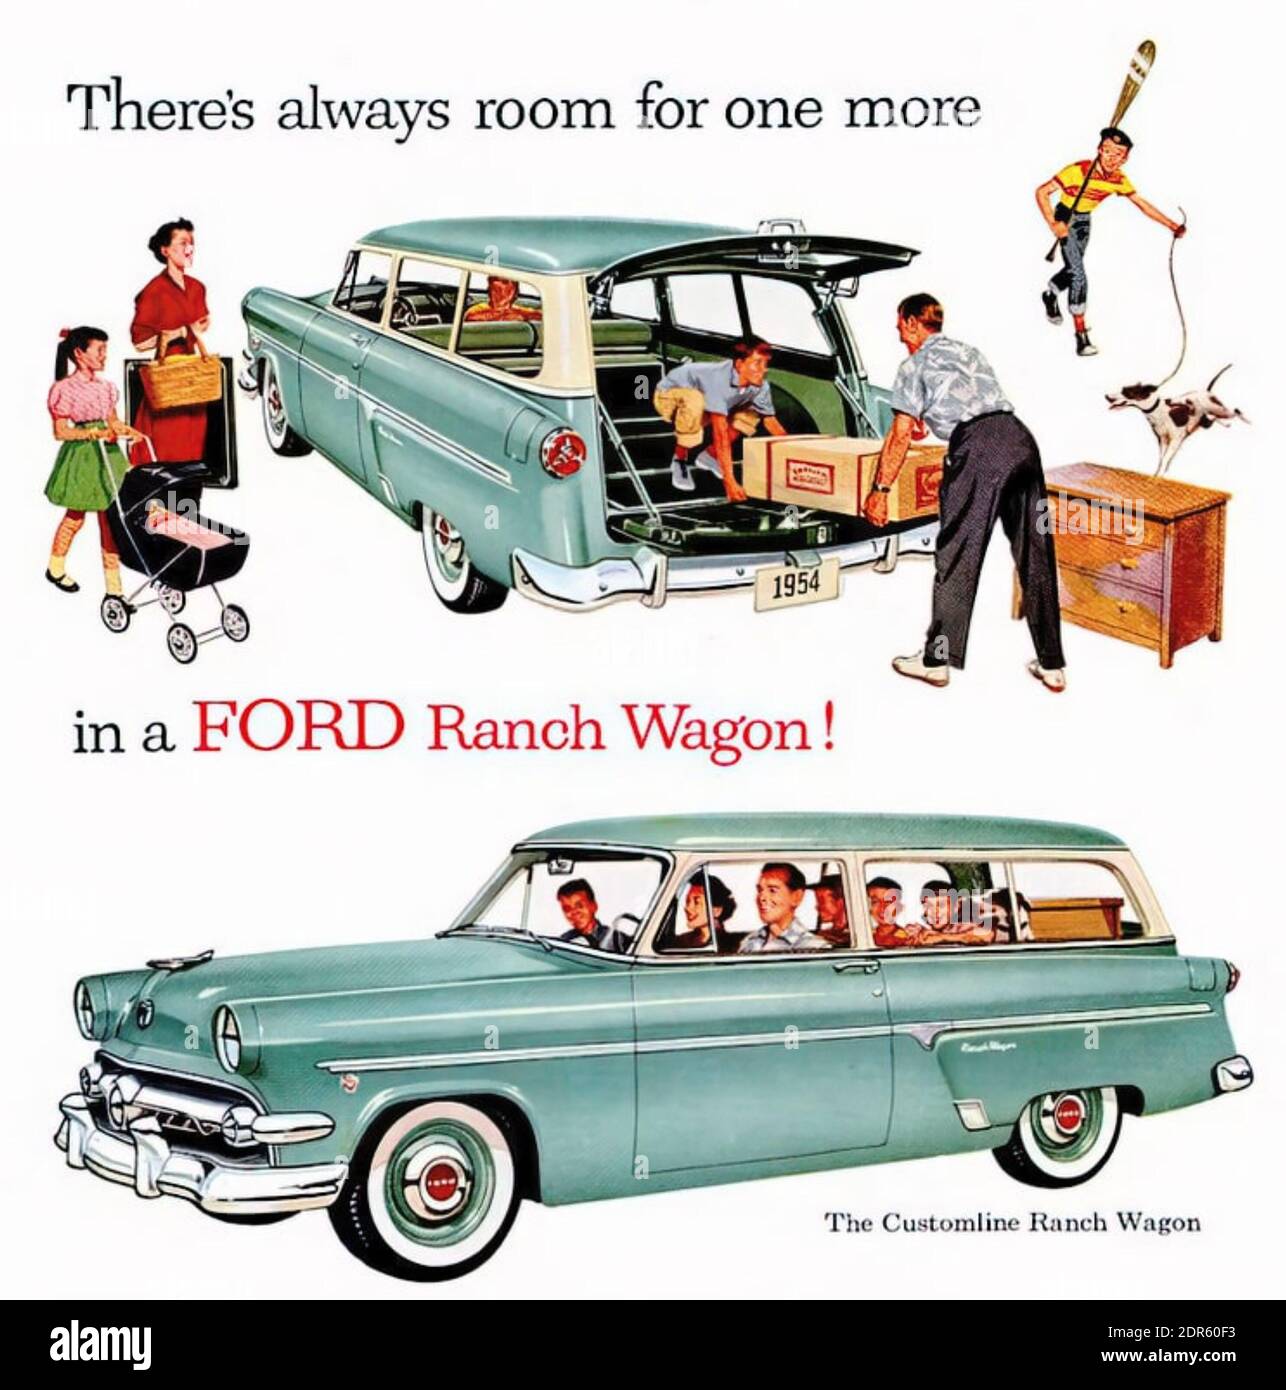 FORD RANCH WAGON ADVERT 1954 Stock Photo